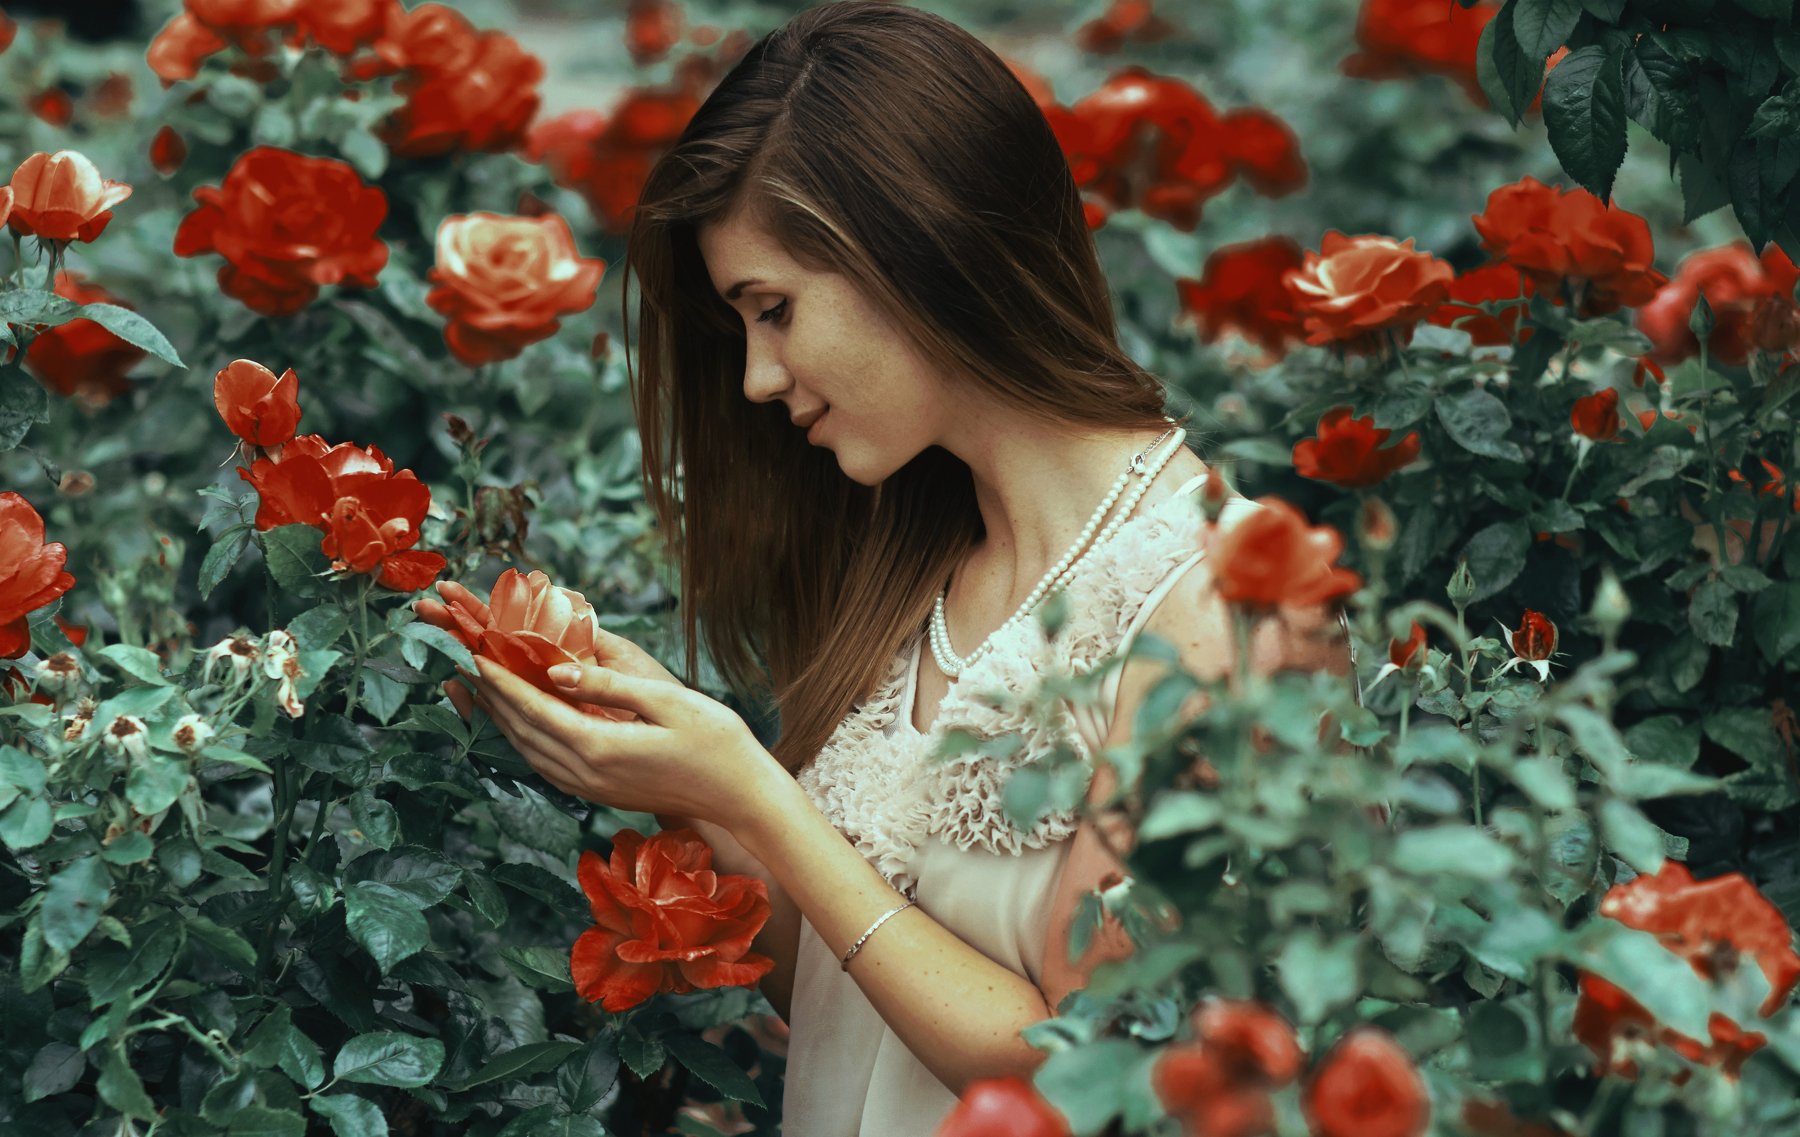 #photography #portrait #girl #smile #roses #dark, fineus